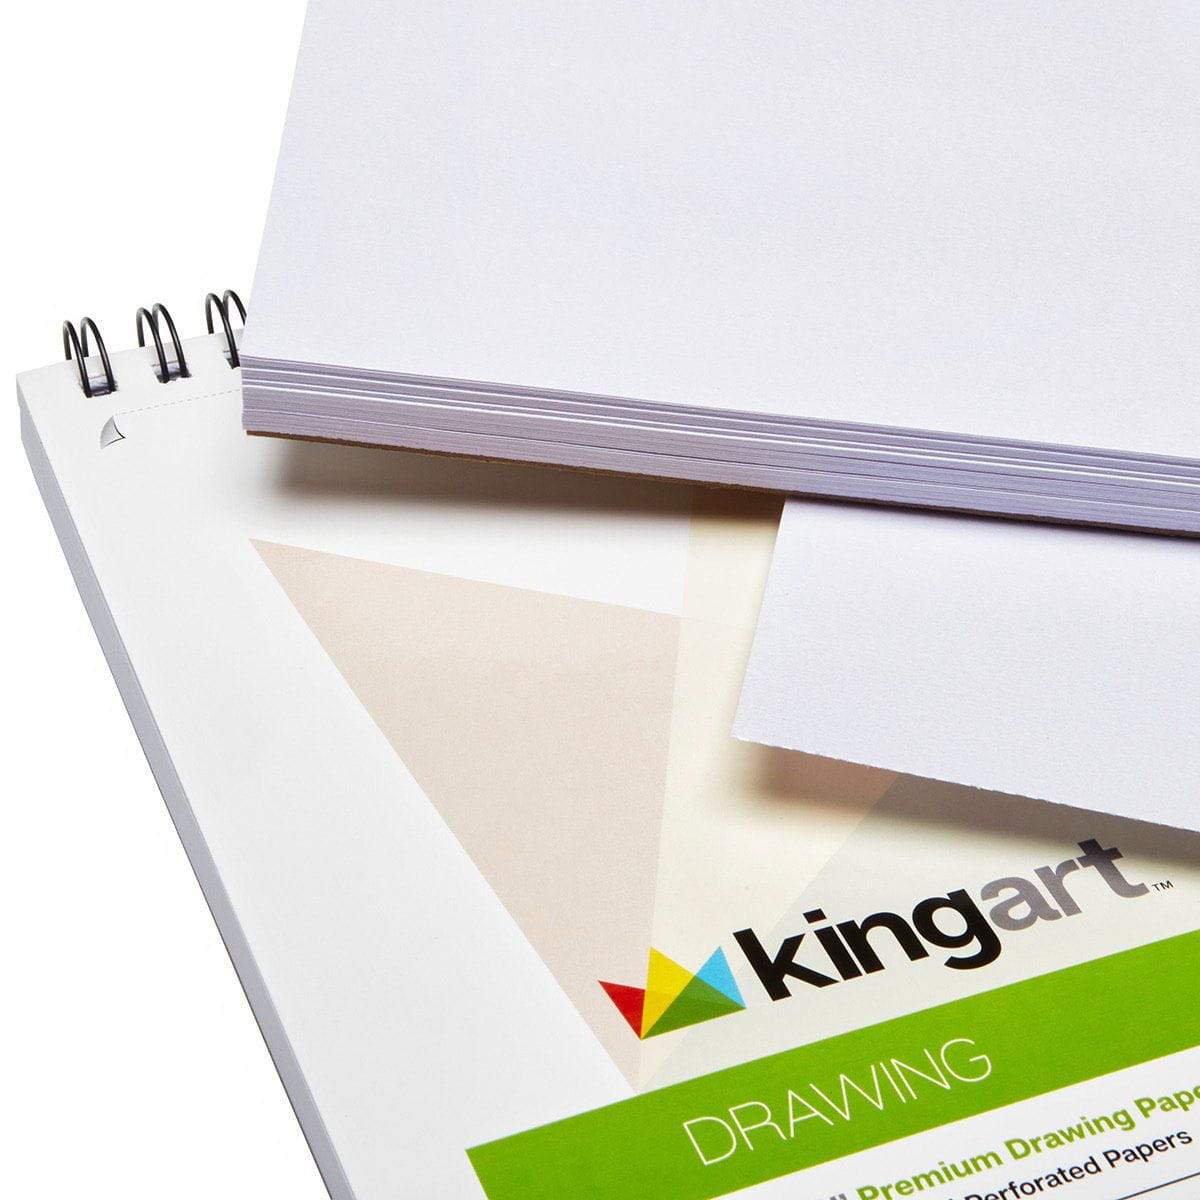 Kingart Top Spiral Drawing Pad 8x10 2 Pack - 75 Sheets